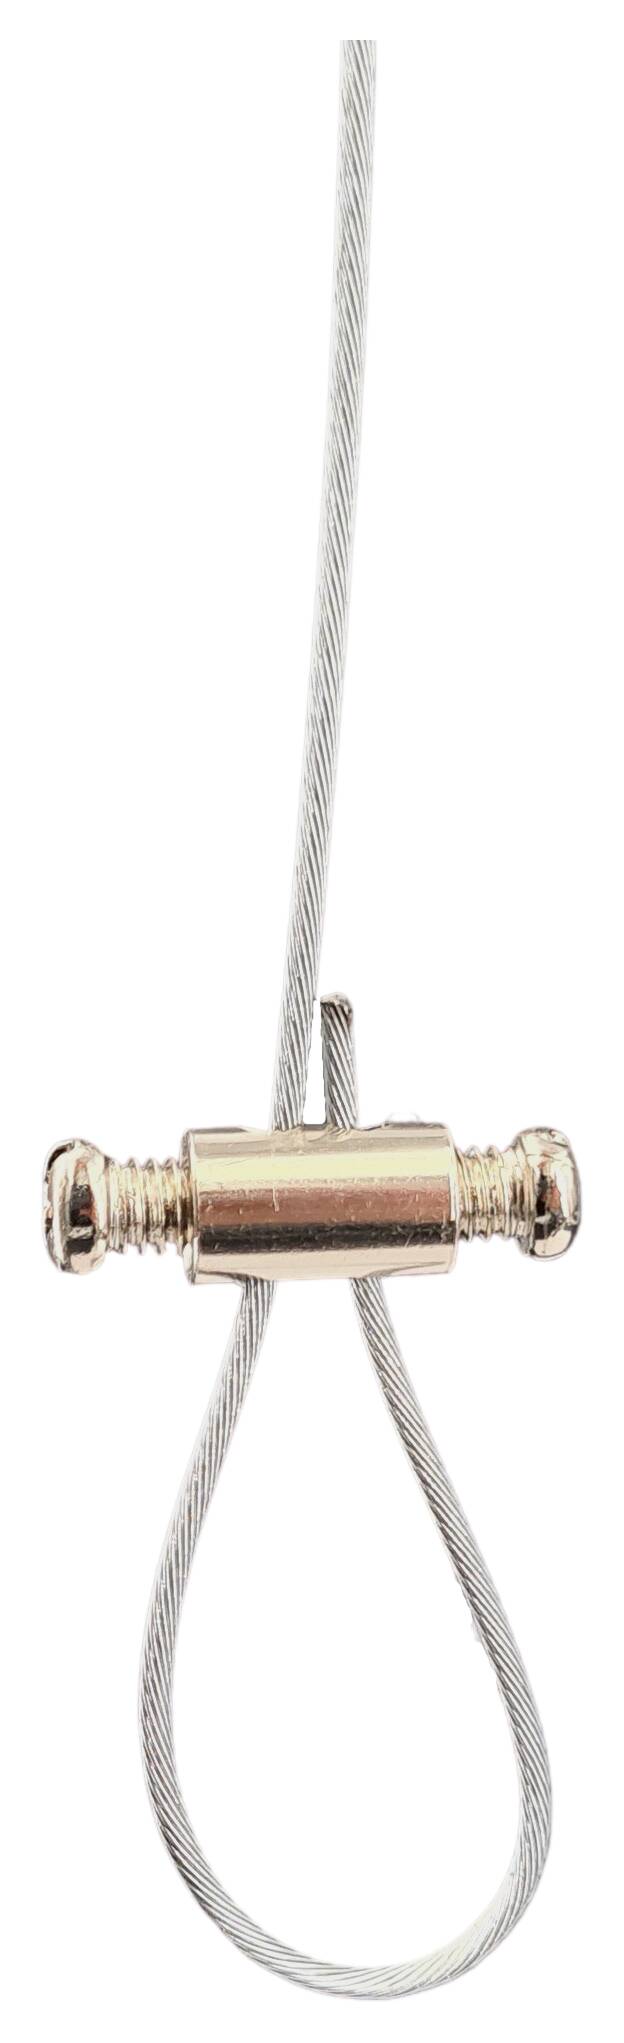 cable blocker / gripper 6x10 with 2 lock screws hole 2x 2 mm nickel